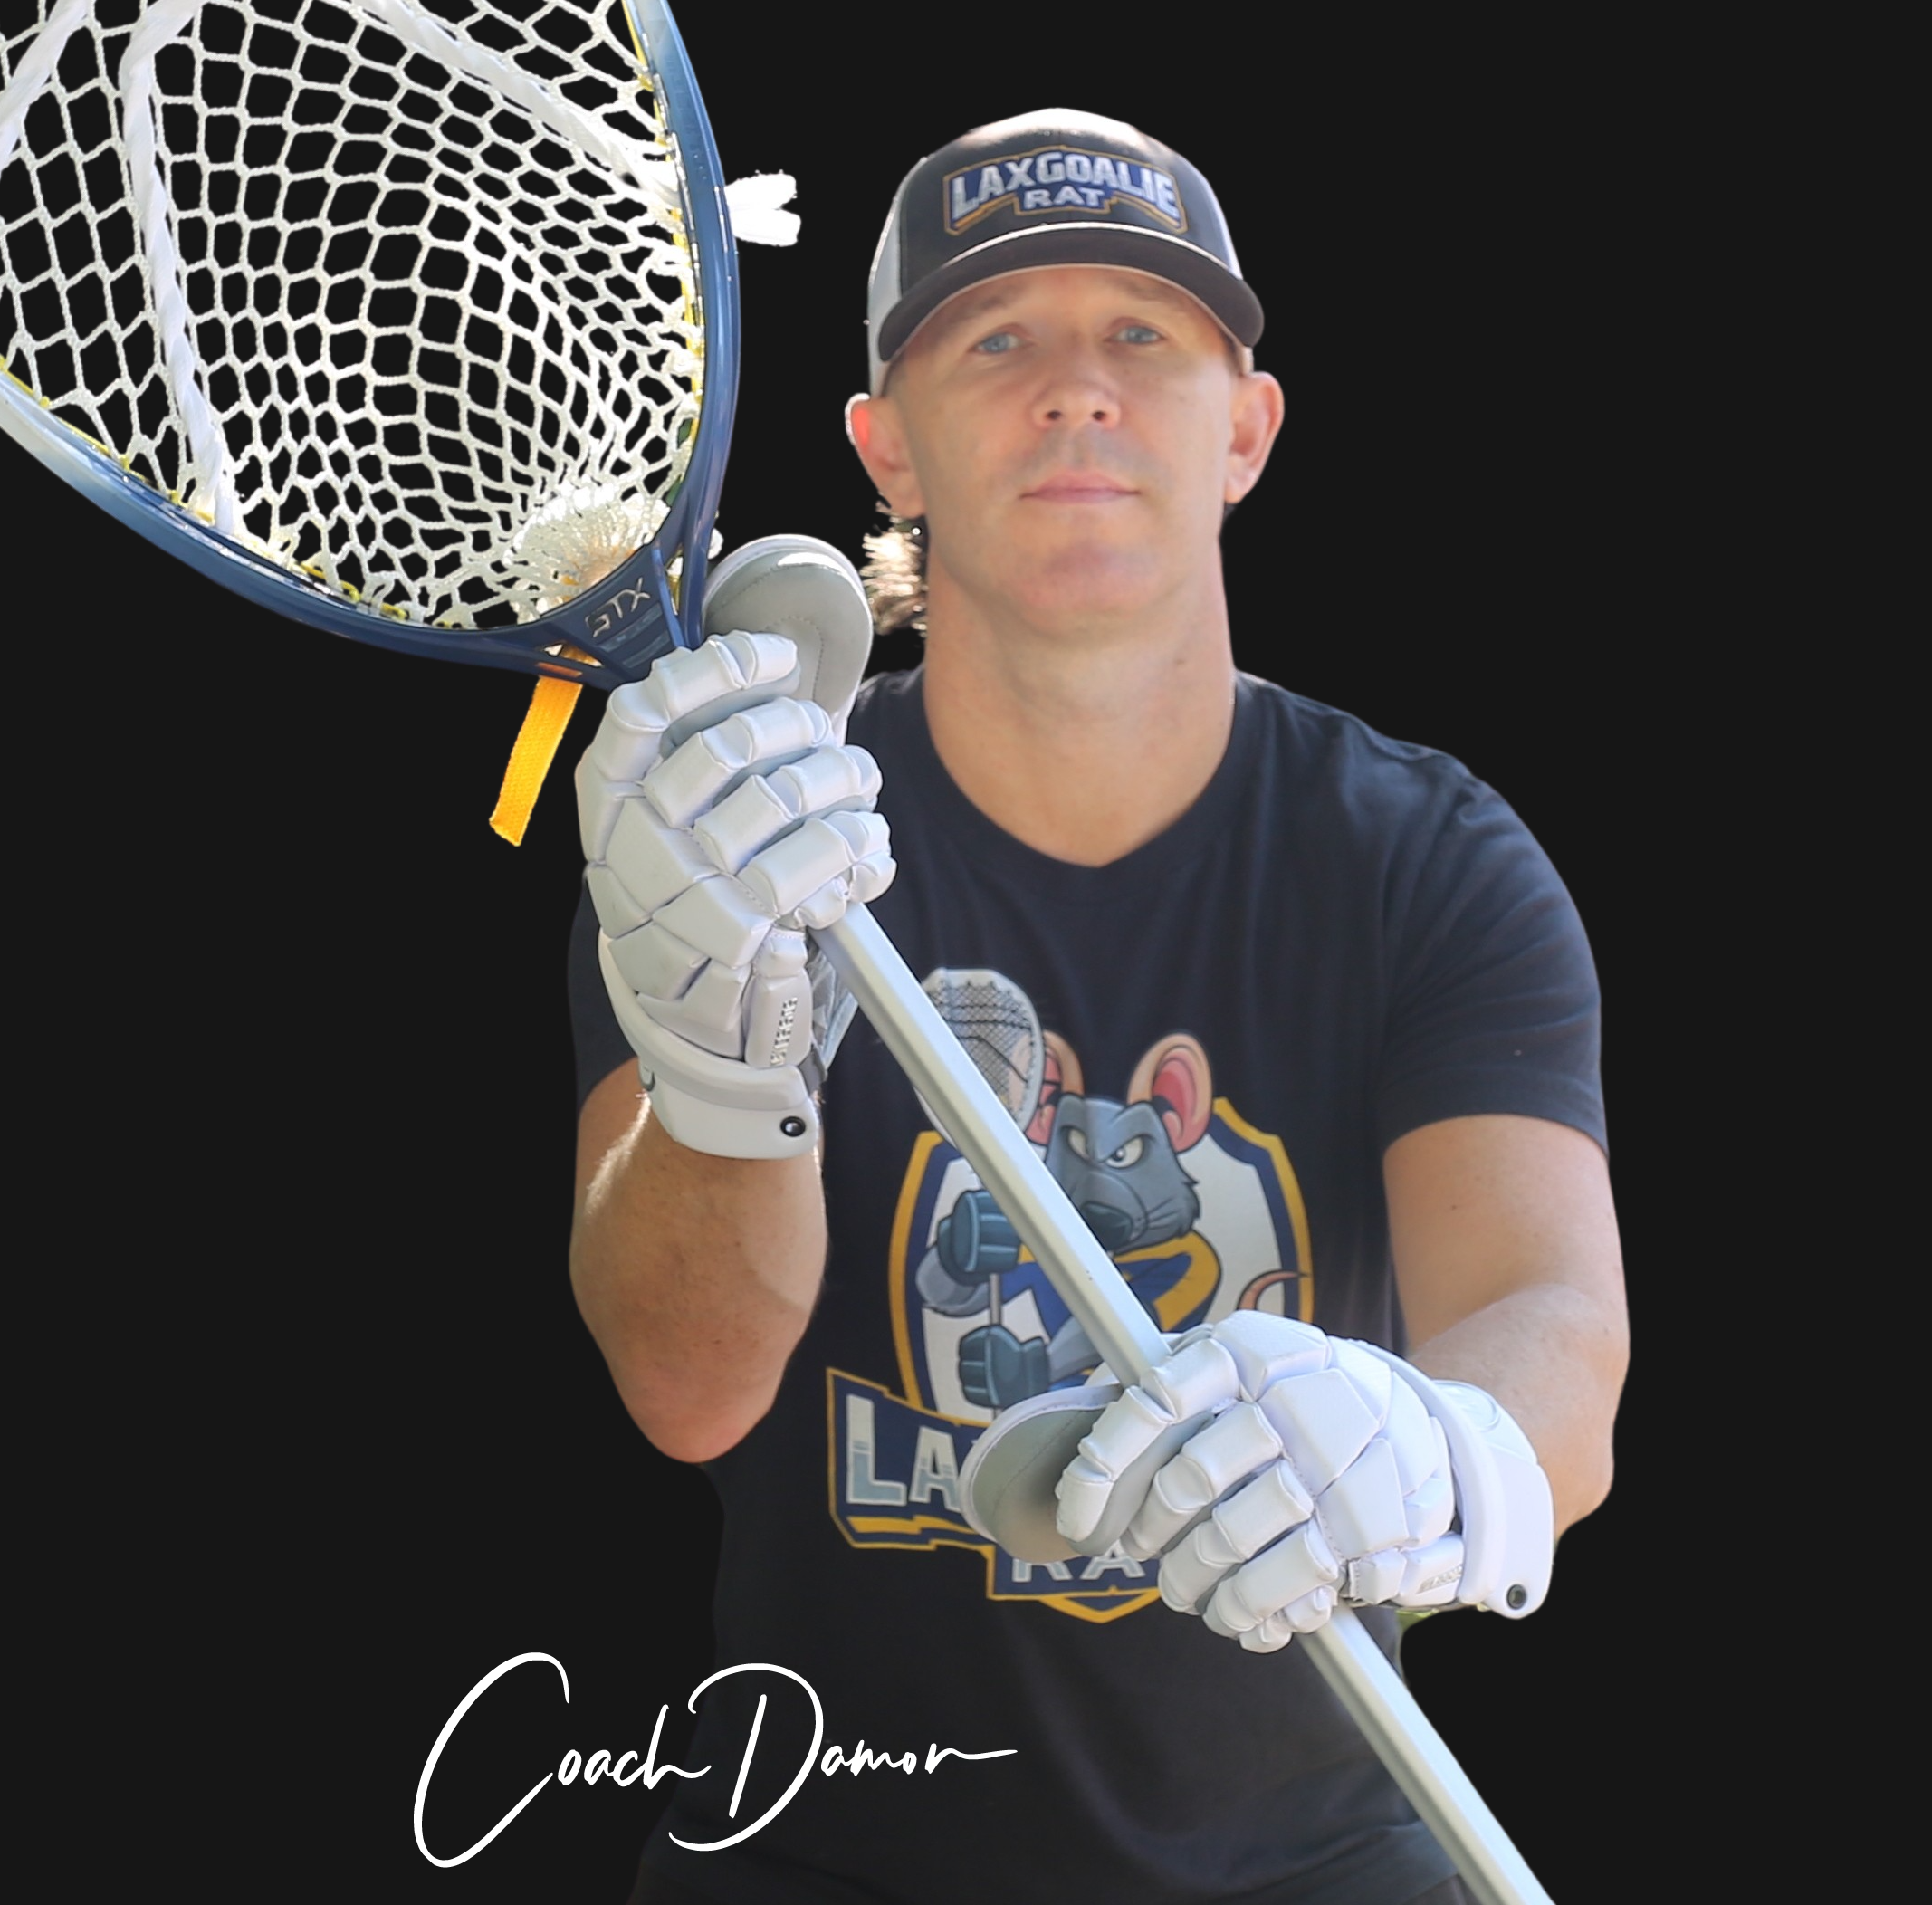 Coach Damon - Lacrosse Goalie Coach